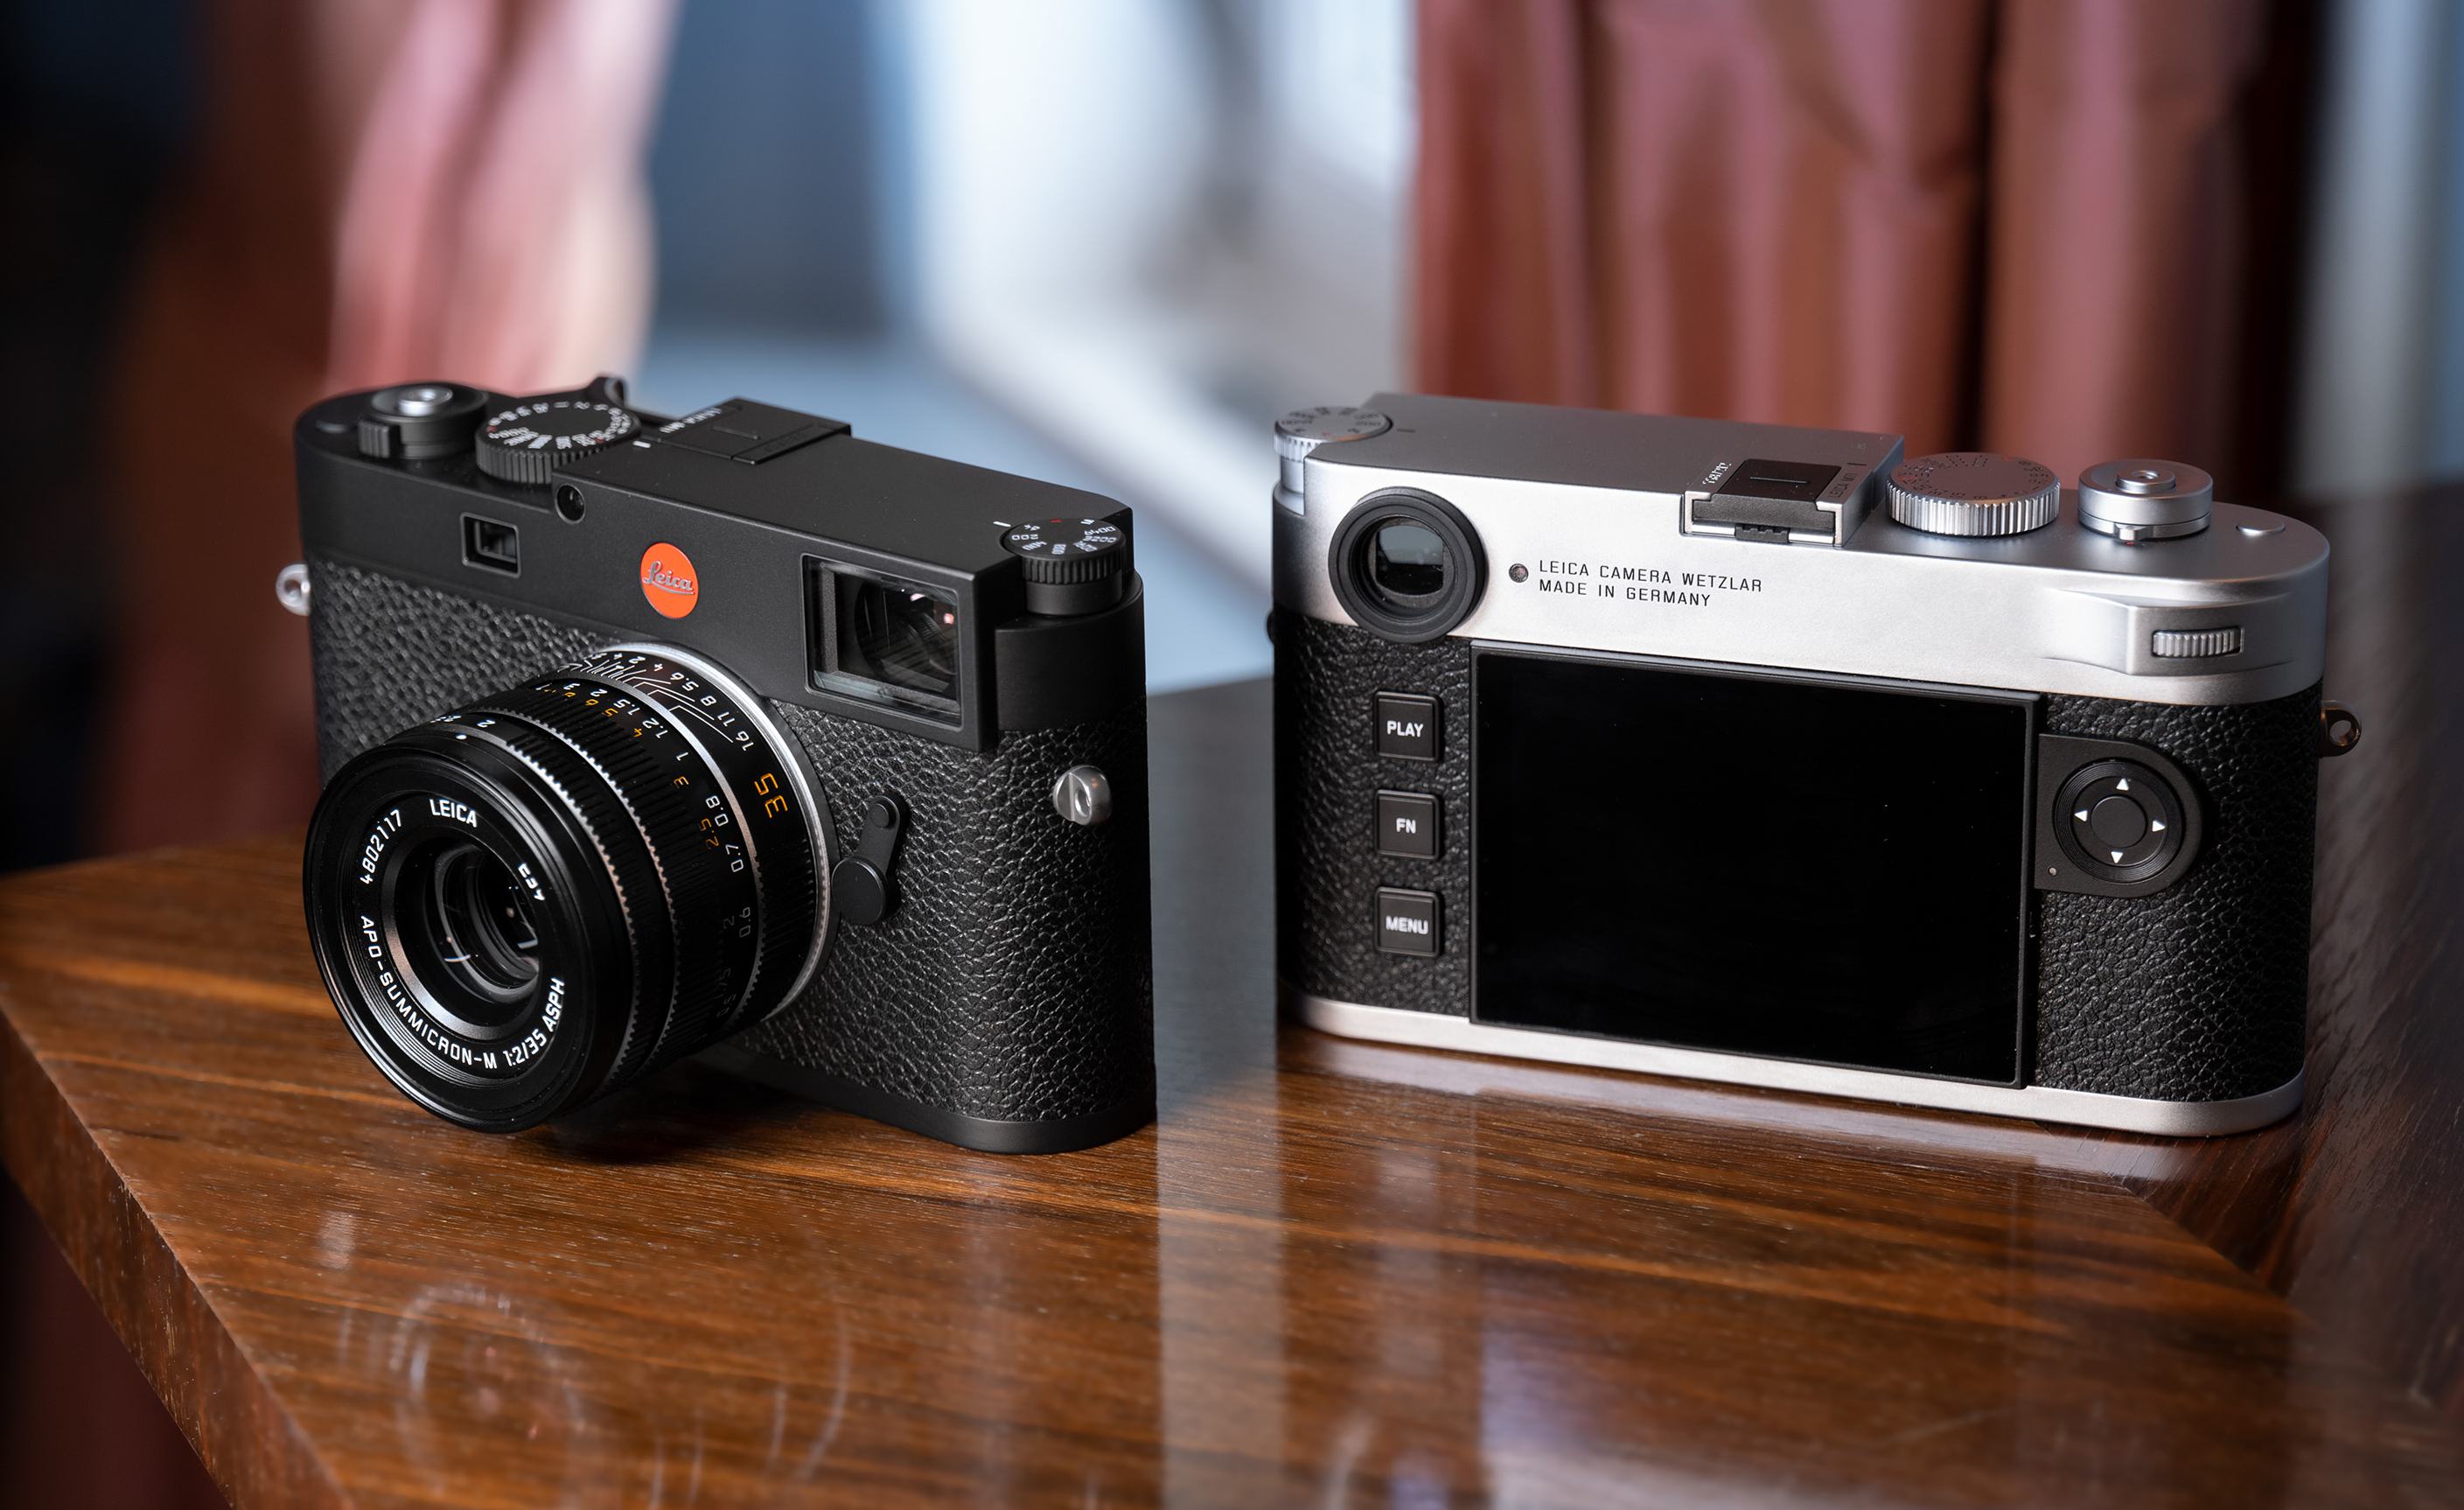 omverwerping Los Varen Leica's M11 rangefinder camera features a 60-megapixel, full-frame sensor |  Engadget